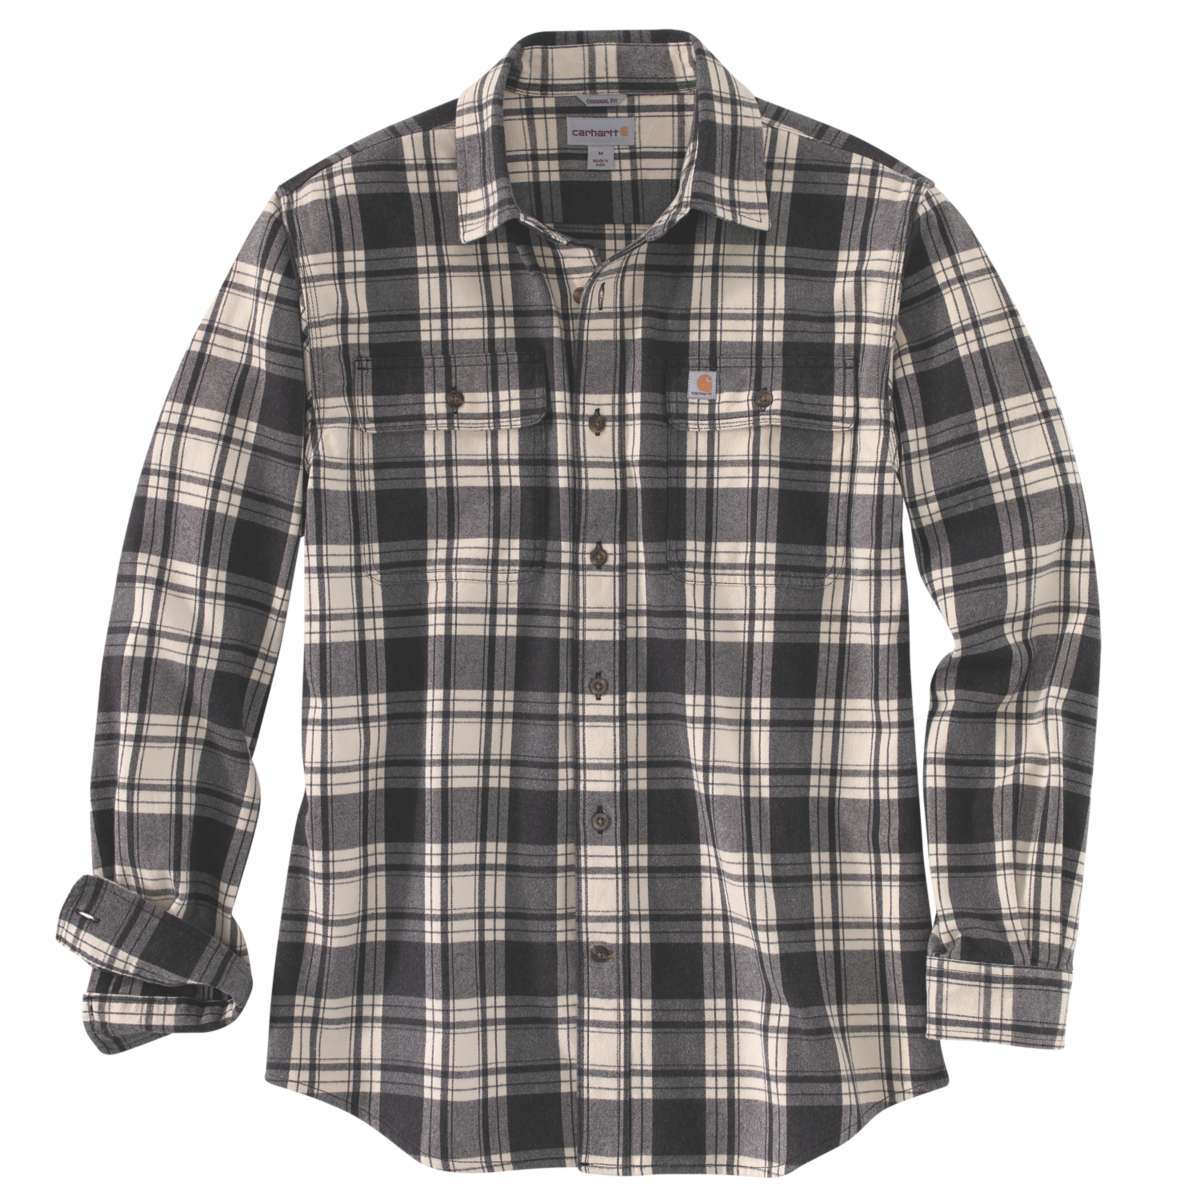 Carhartt Men's Hubbard Plaid Long-Sleeve Flannel Shirt - Black, XL